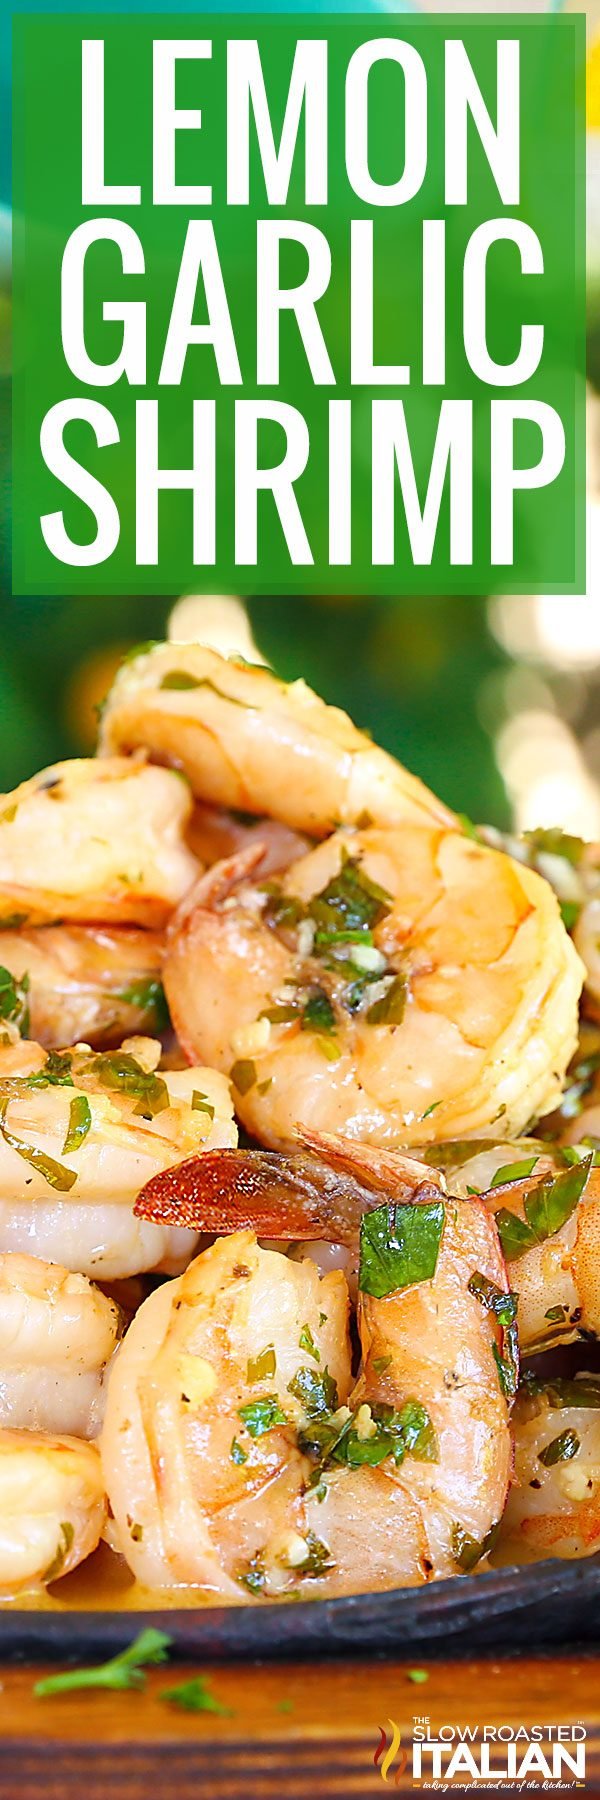 titled image (and shown): lemon garlic shrimp